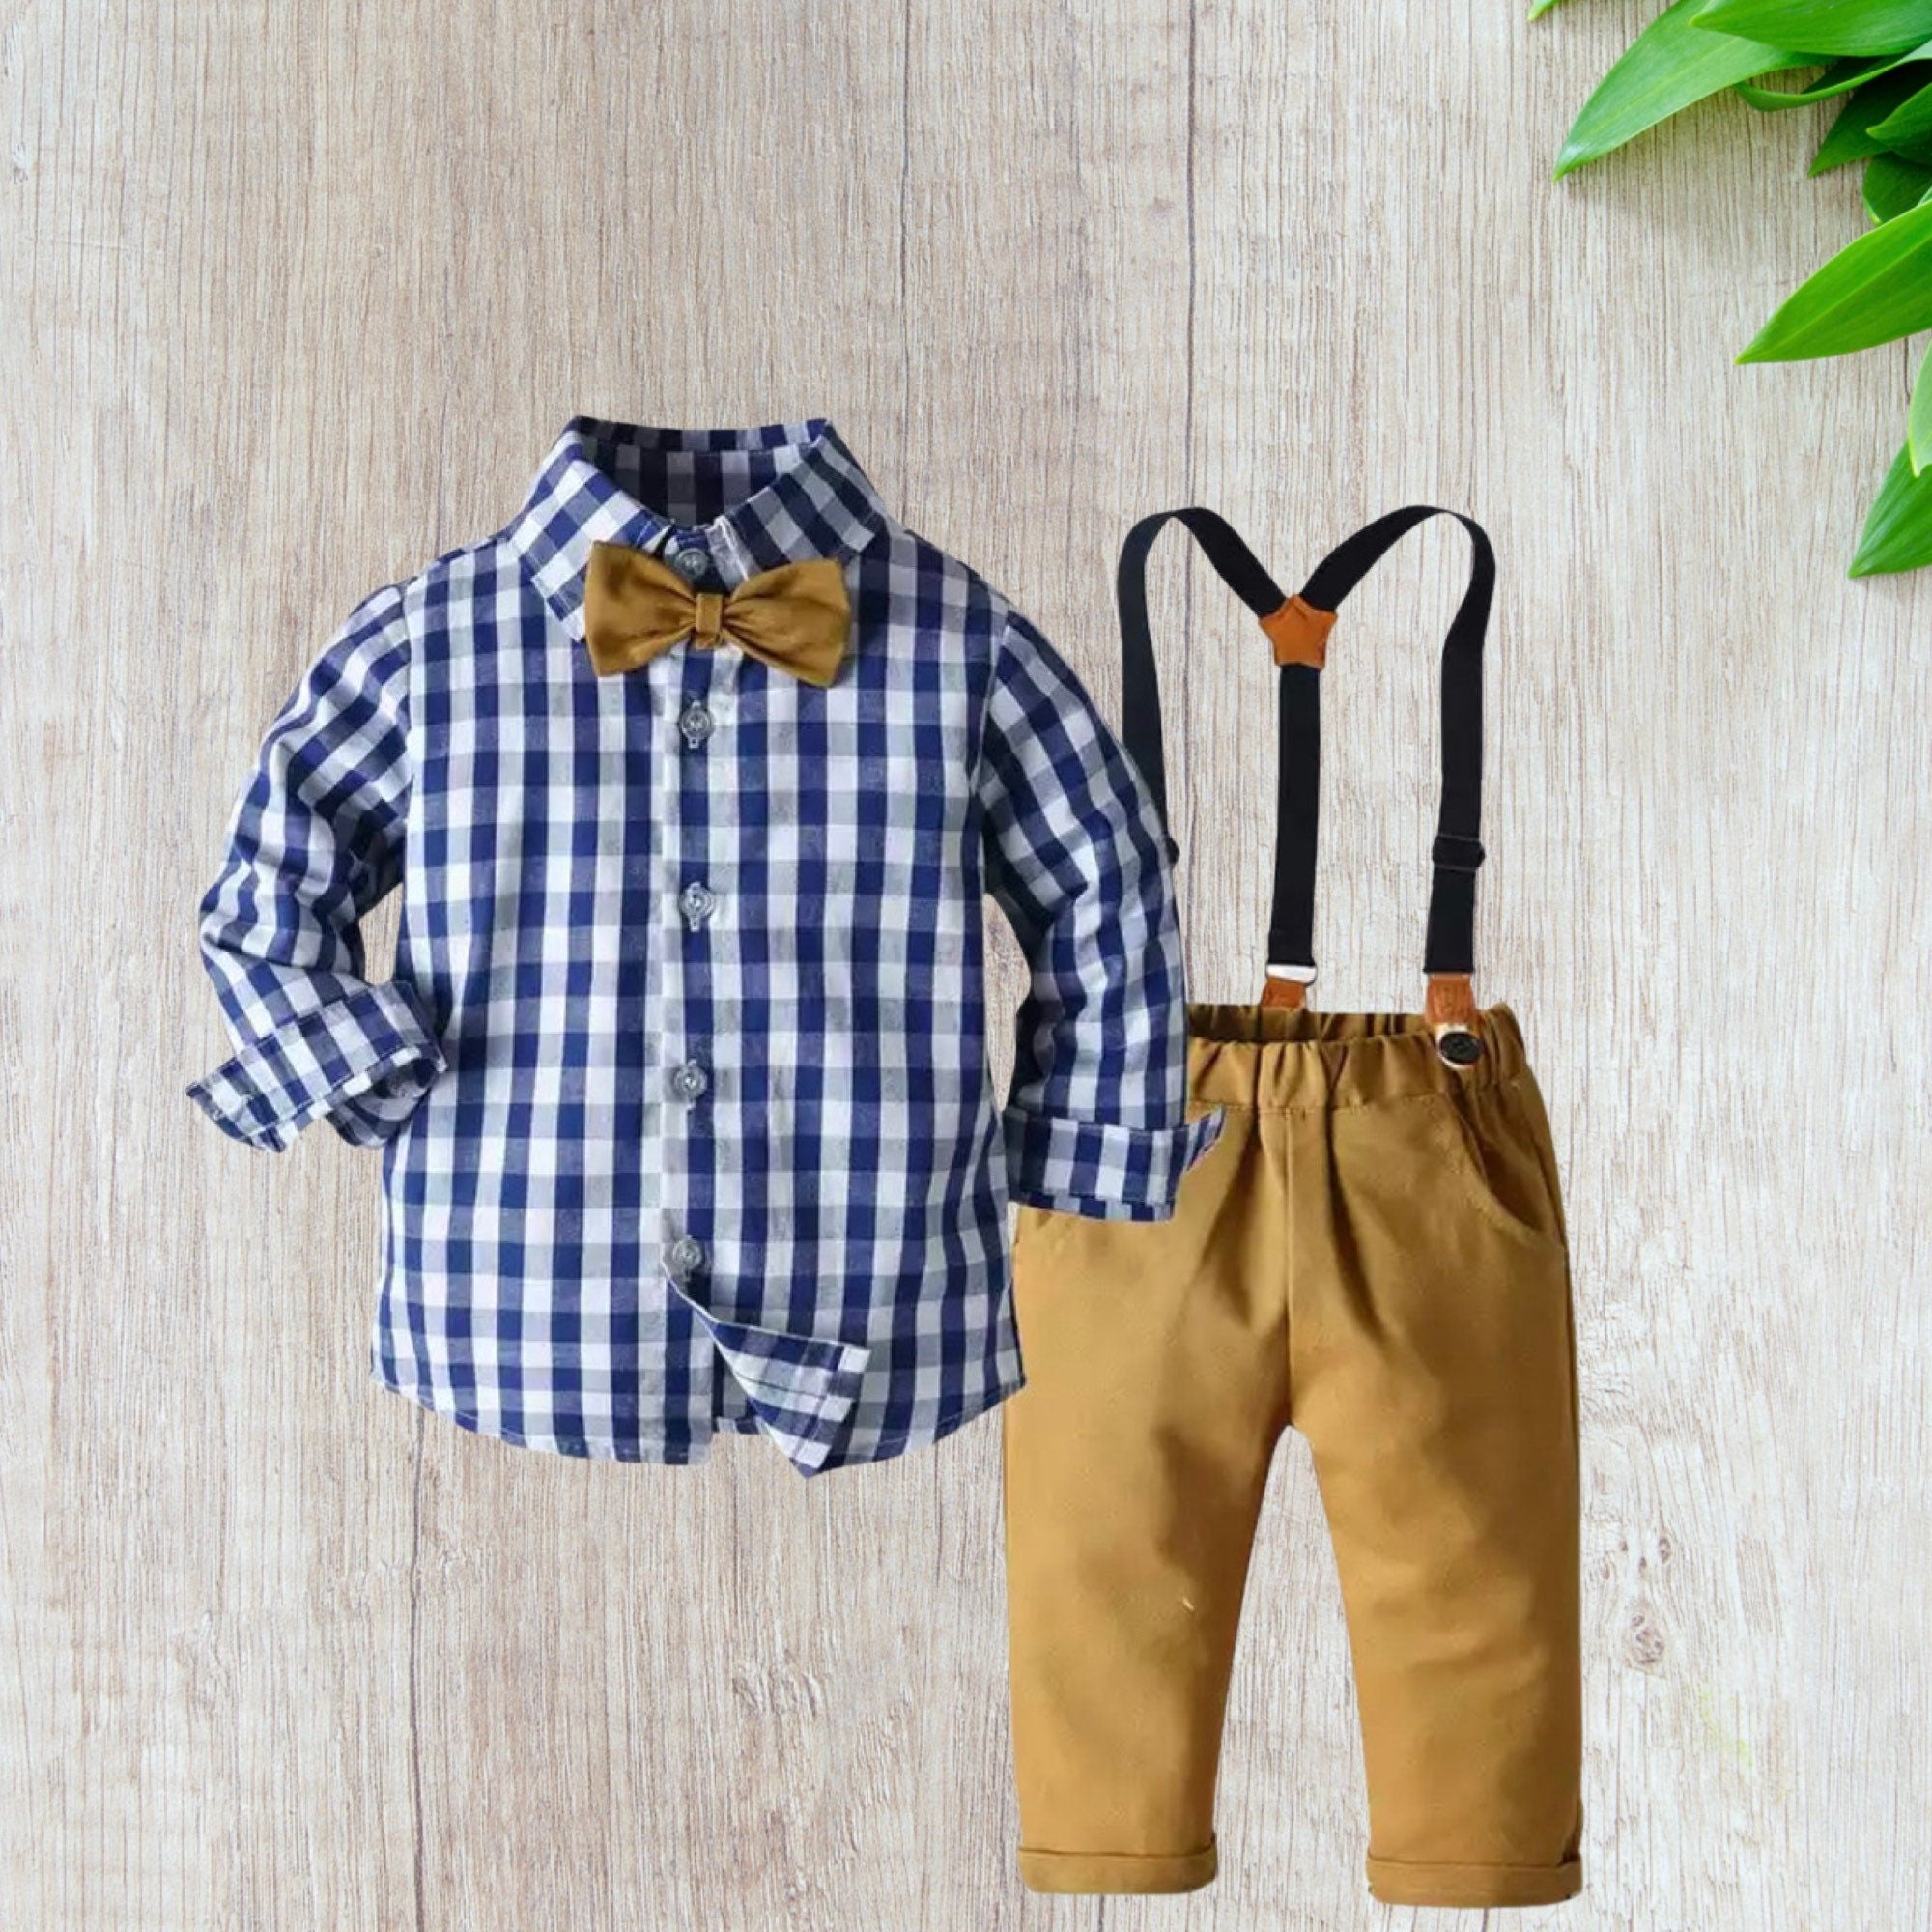 Mayfair - Baby / Toddler Boys Long Sleeve Suit Set.